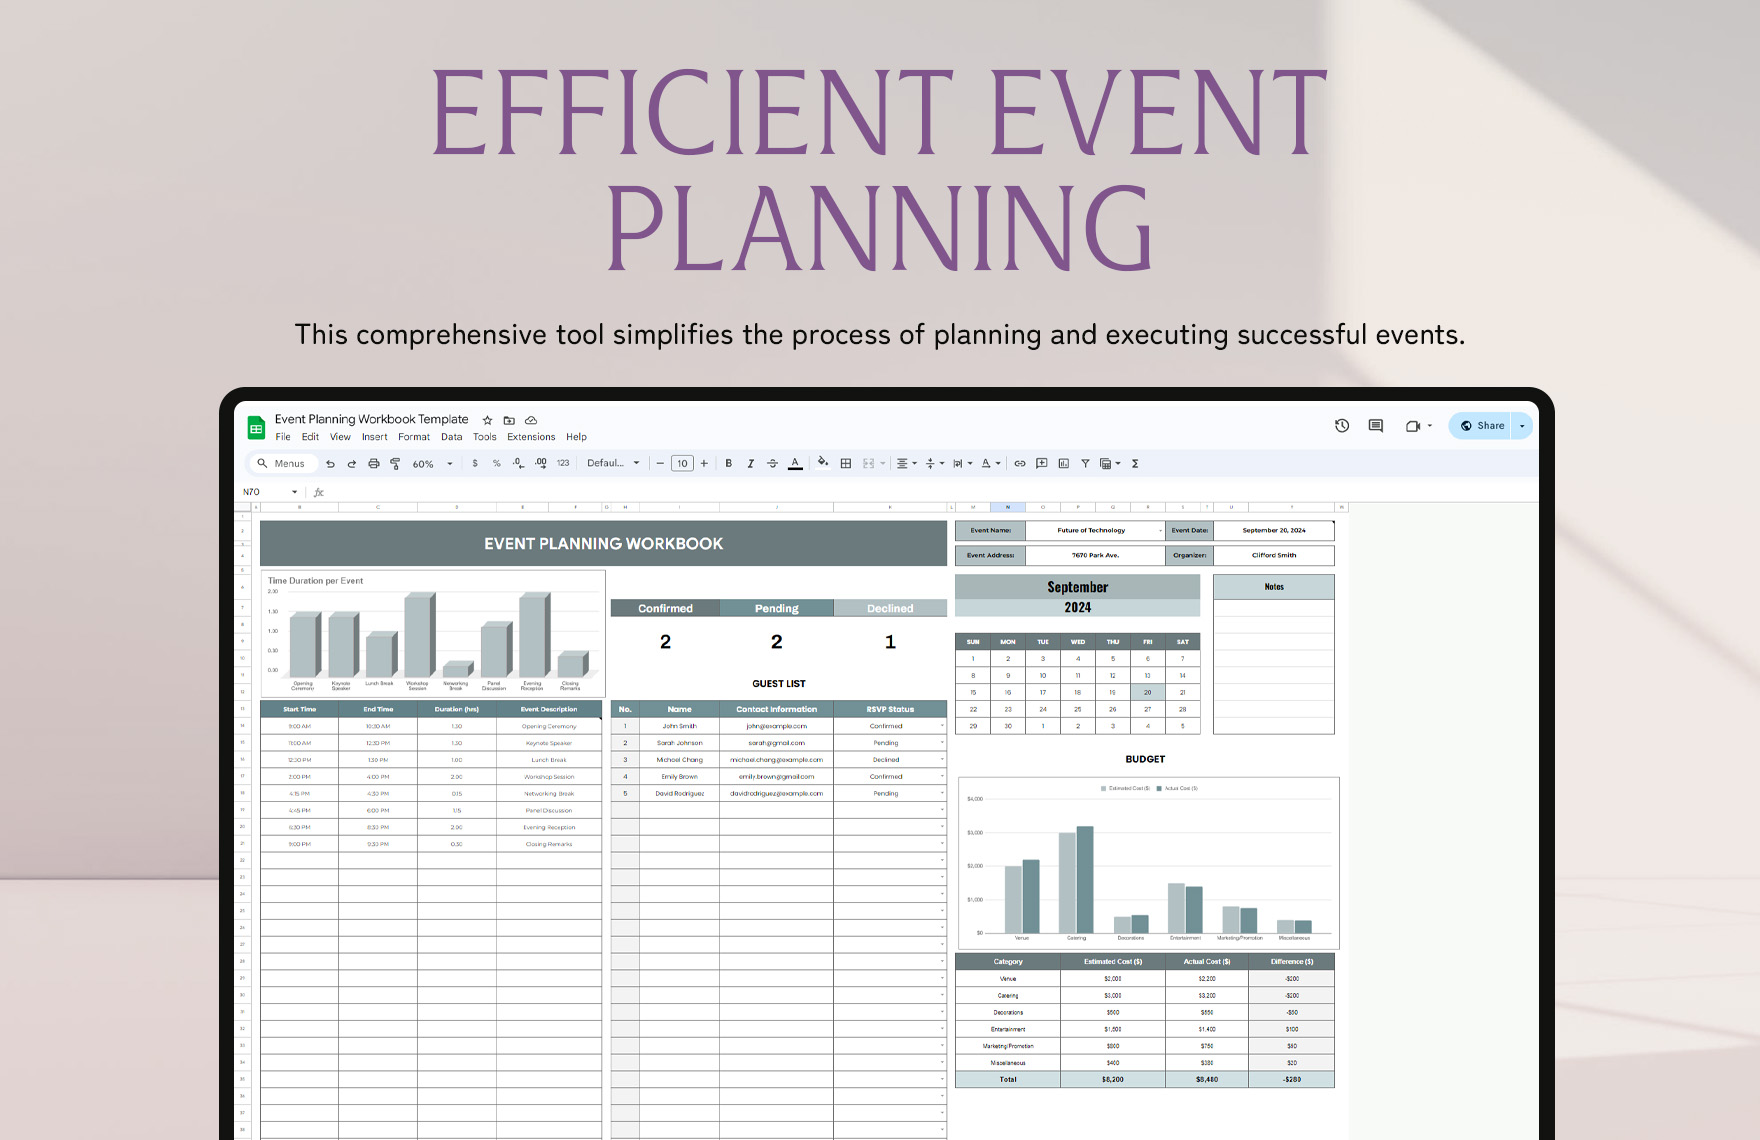 Event Planning Workbook Template